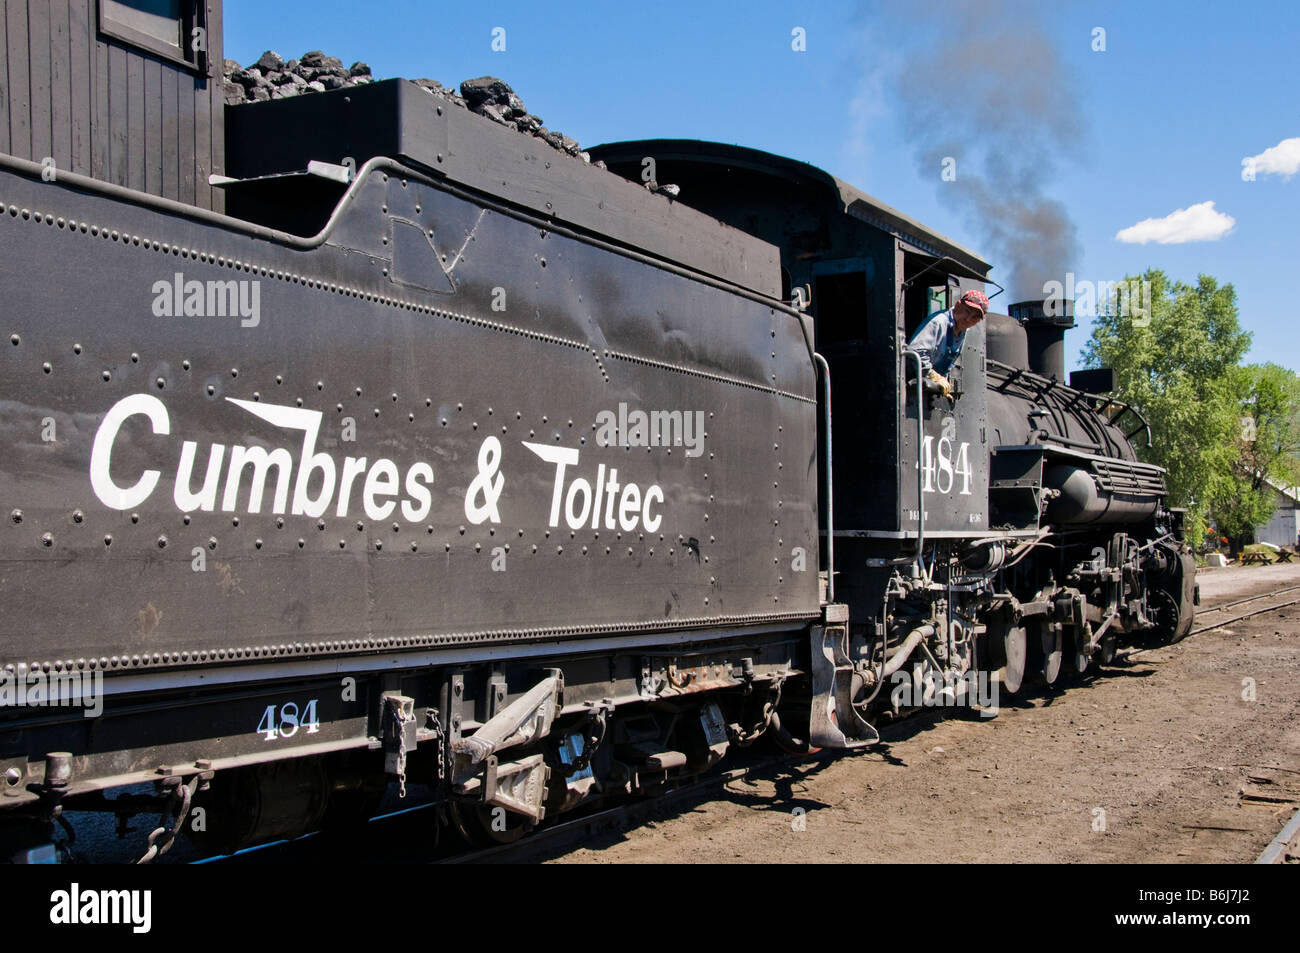 Old fashioned vintage locomotive train engine moving on tracks Stock Photo